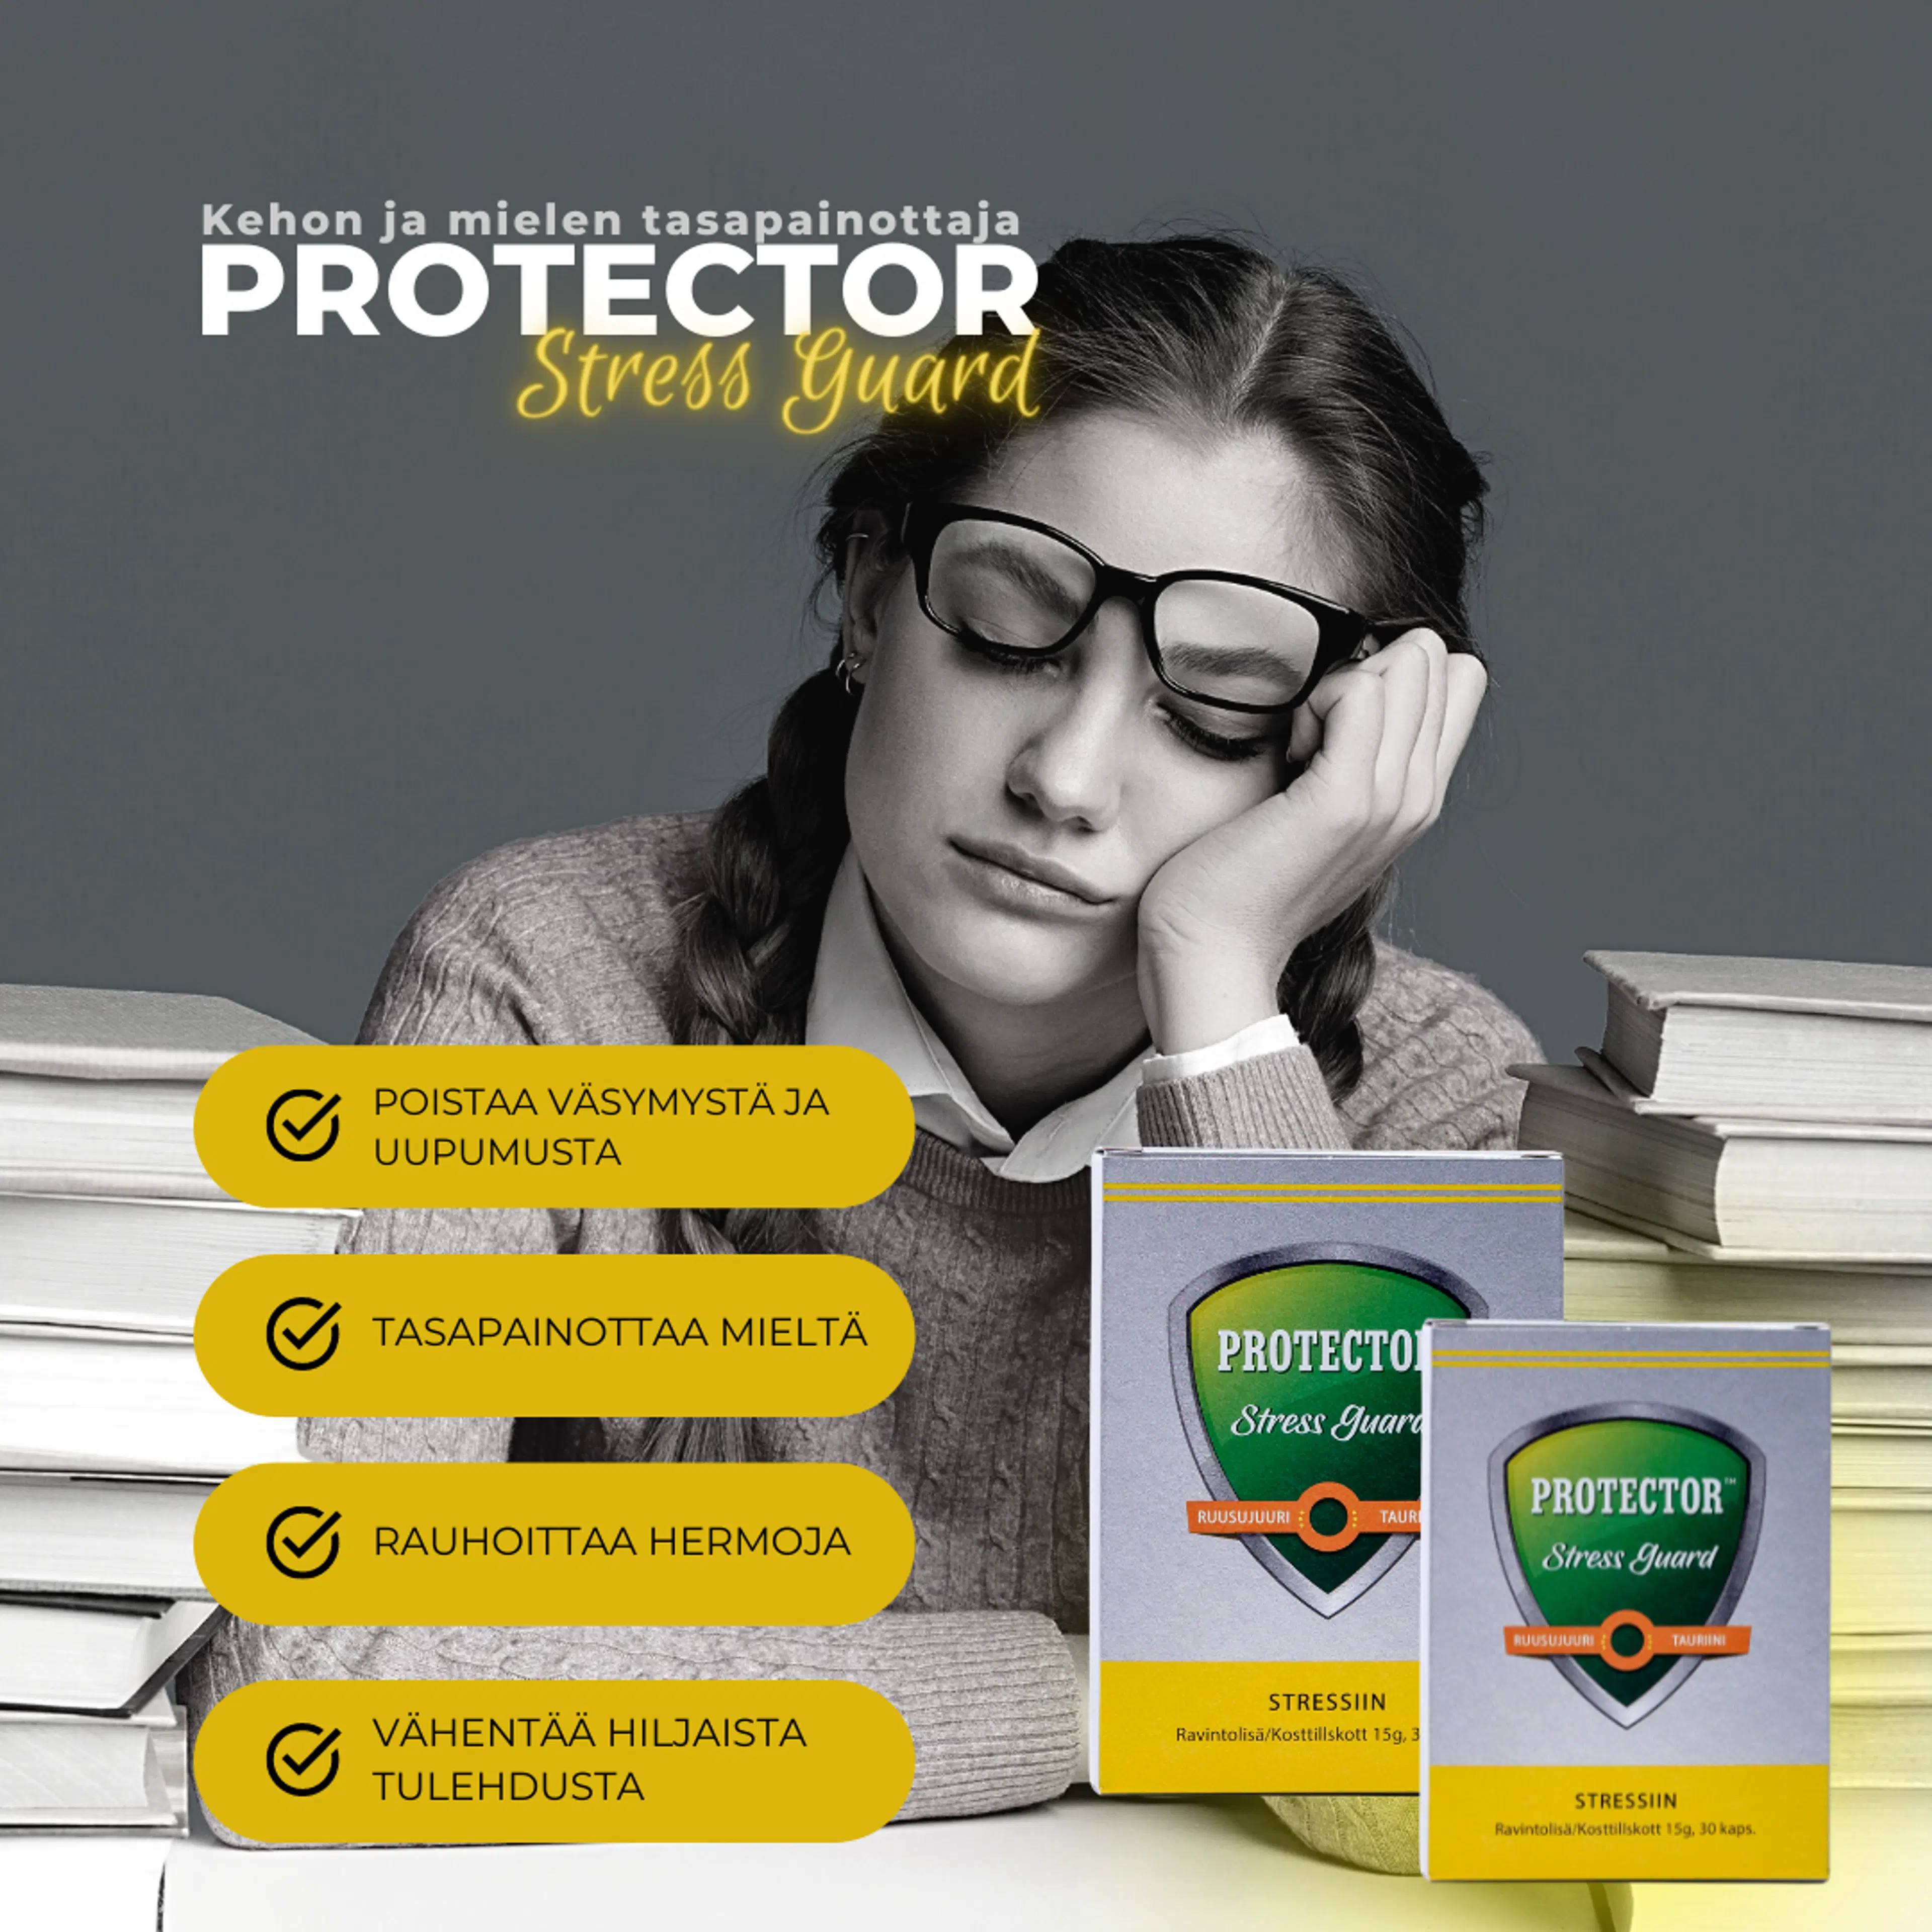 Protector™ Stress Guard Ruusujuuriuute-kaseiini-tauriini-melonikapseli ravintolisä 30 kaps.